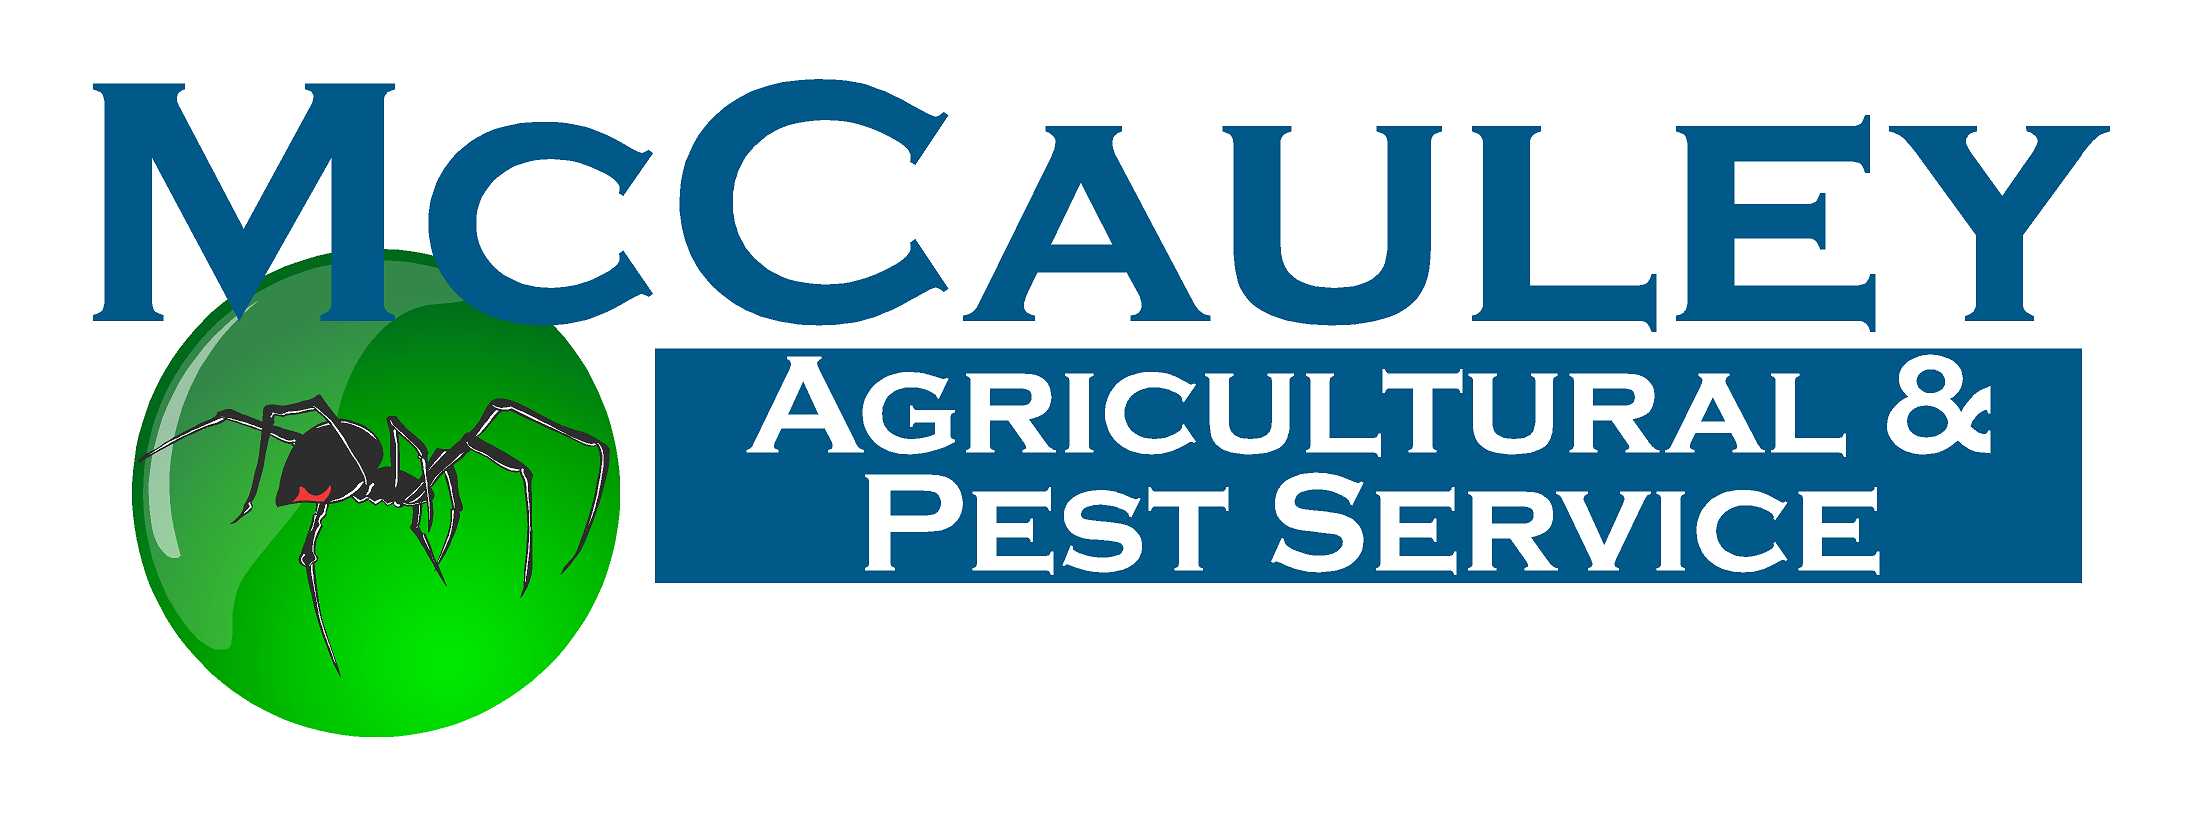 McCauley Agricultural & Pest Service, Inc. Logo